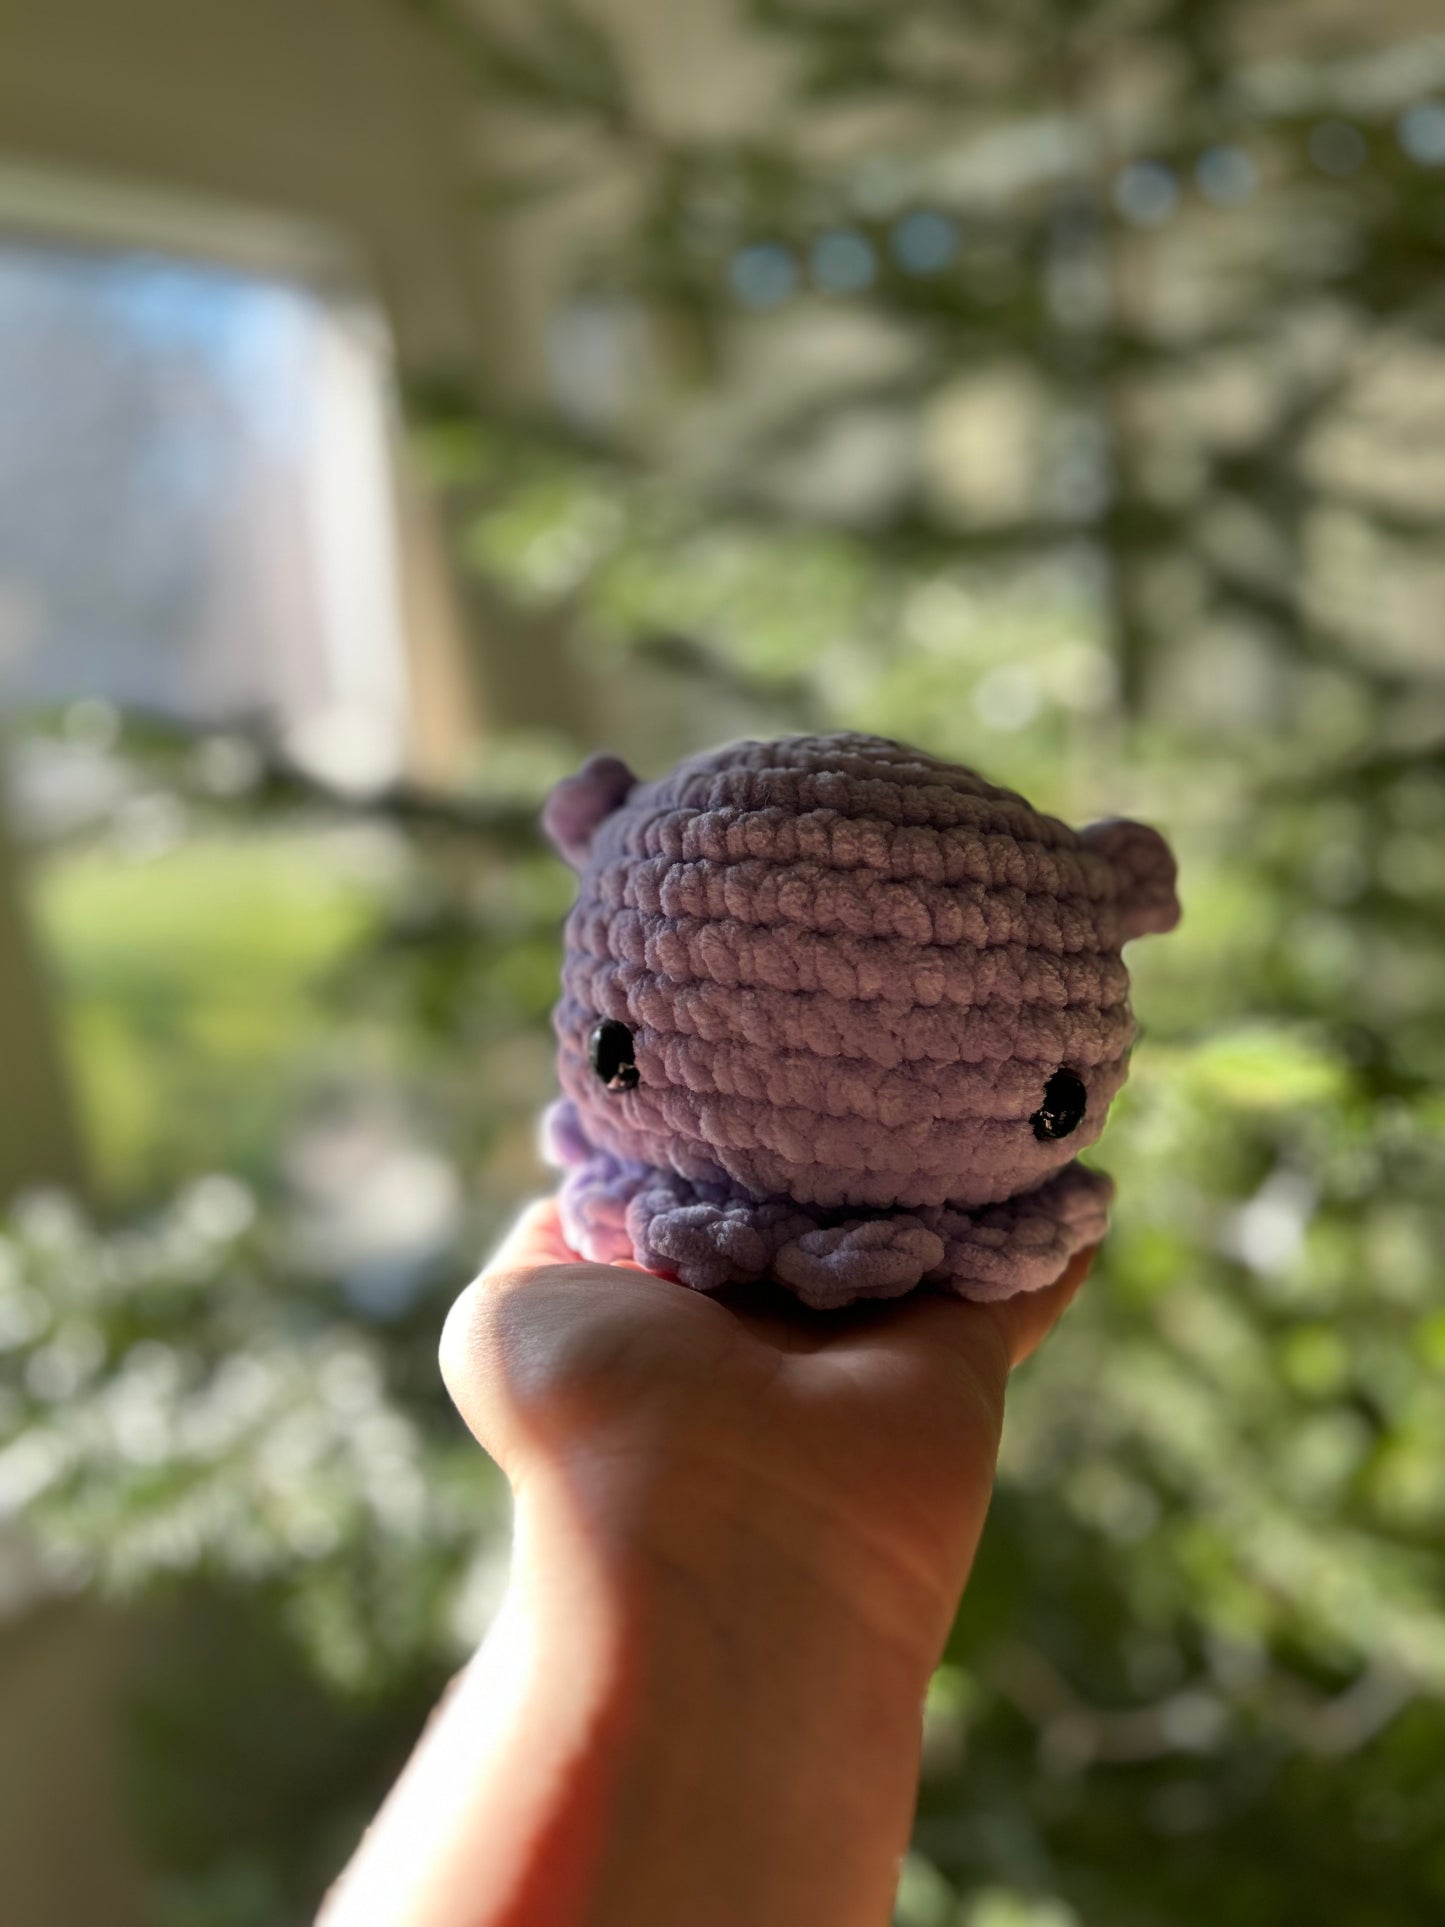 Cuttlefish | Handmade Crochet | Amigurumi Plushie